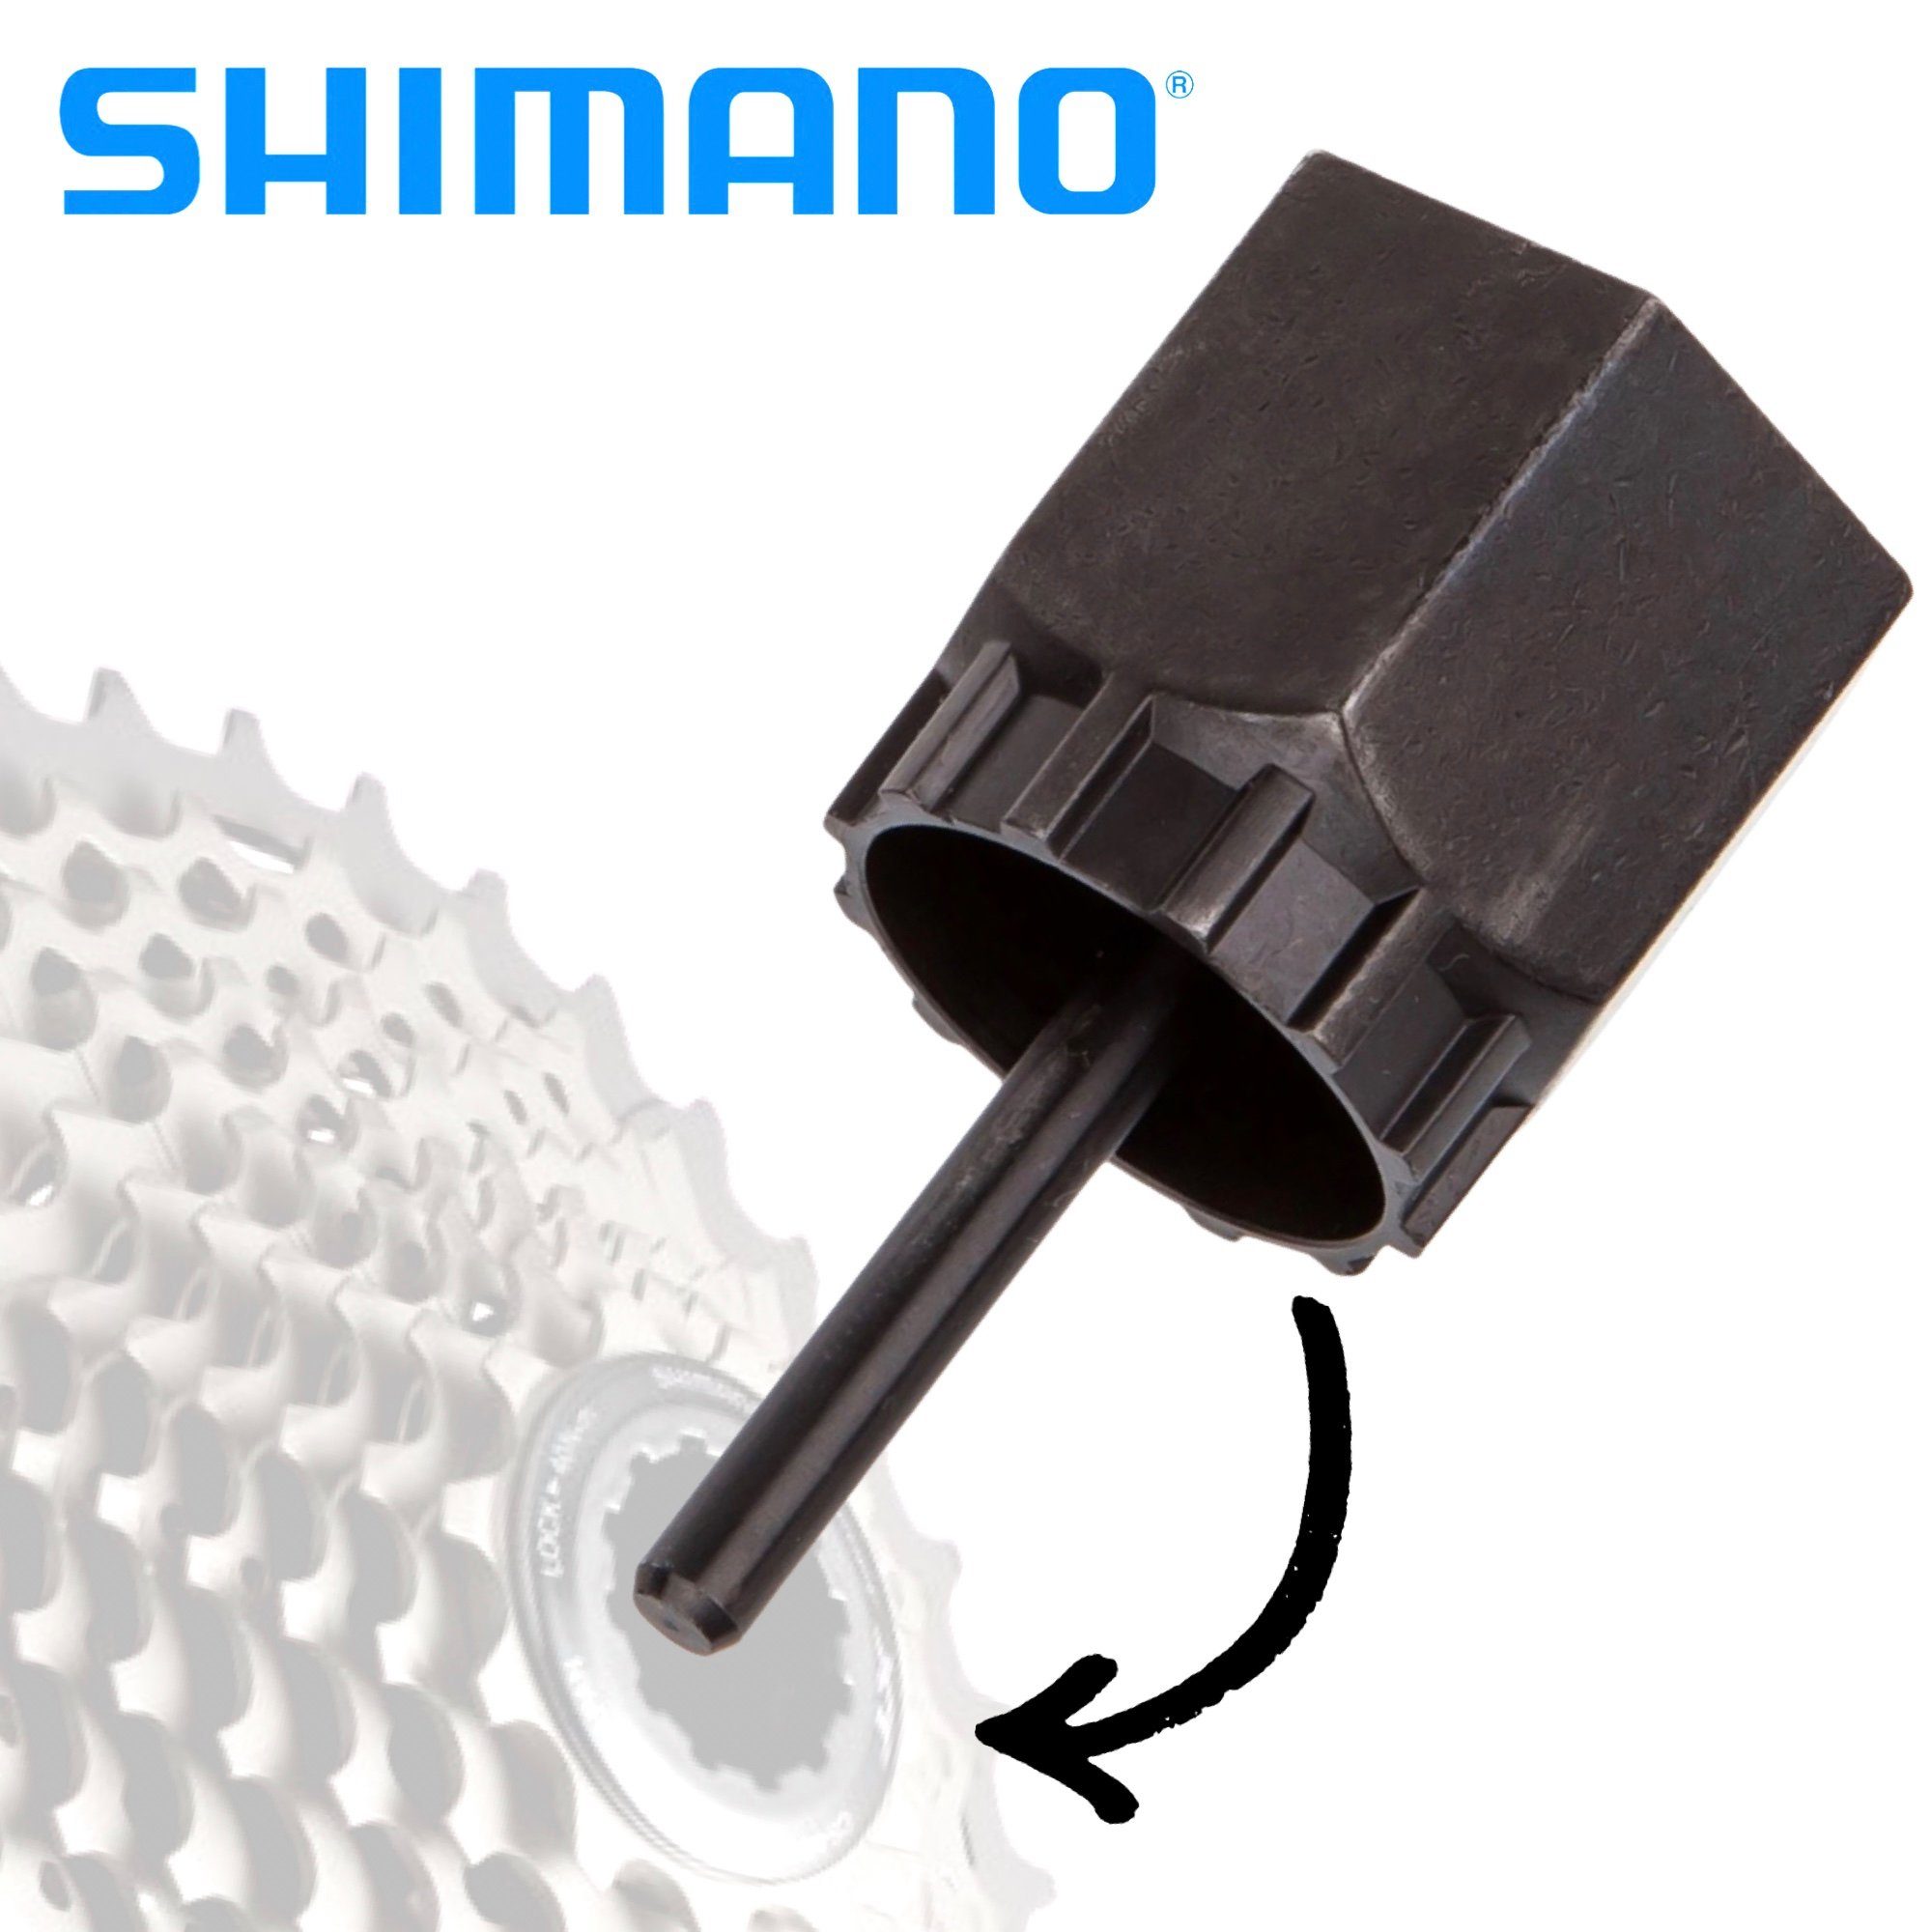 Shimano Fahrrad-Montageständer Shimano Kassettenabzieher TL-LR15 Kassettenverschluss Ring Centerlock